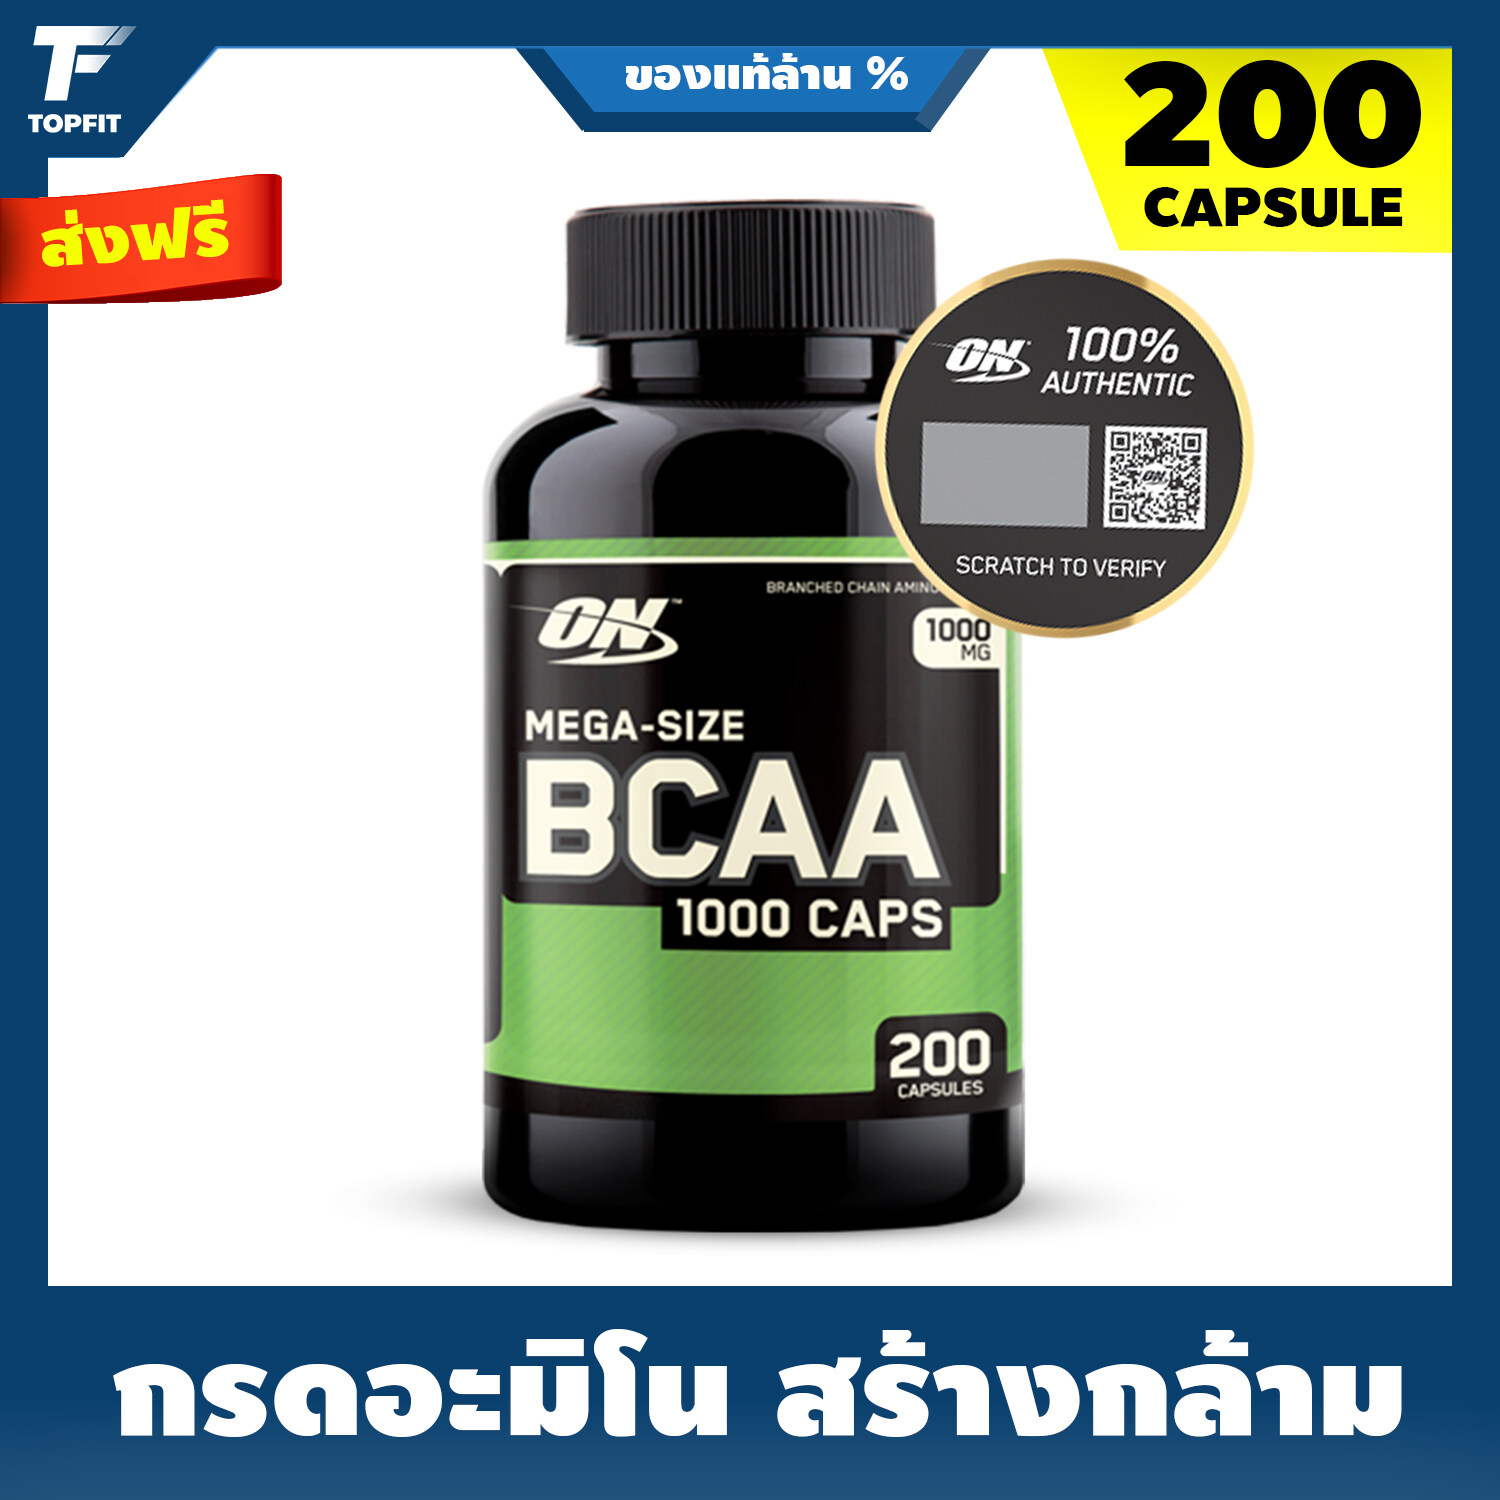 Optimum Nutrition BCAA 1000 Caps (200 CAPSULE) กรดอะมิโนเสริมสร้างกล้ามเนื้อ